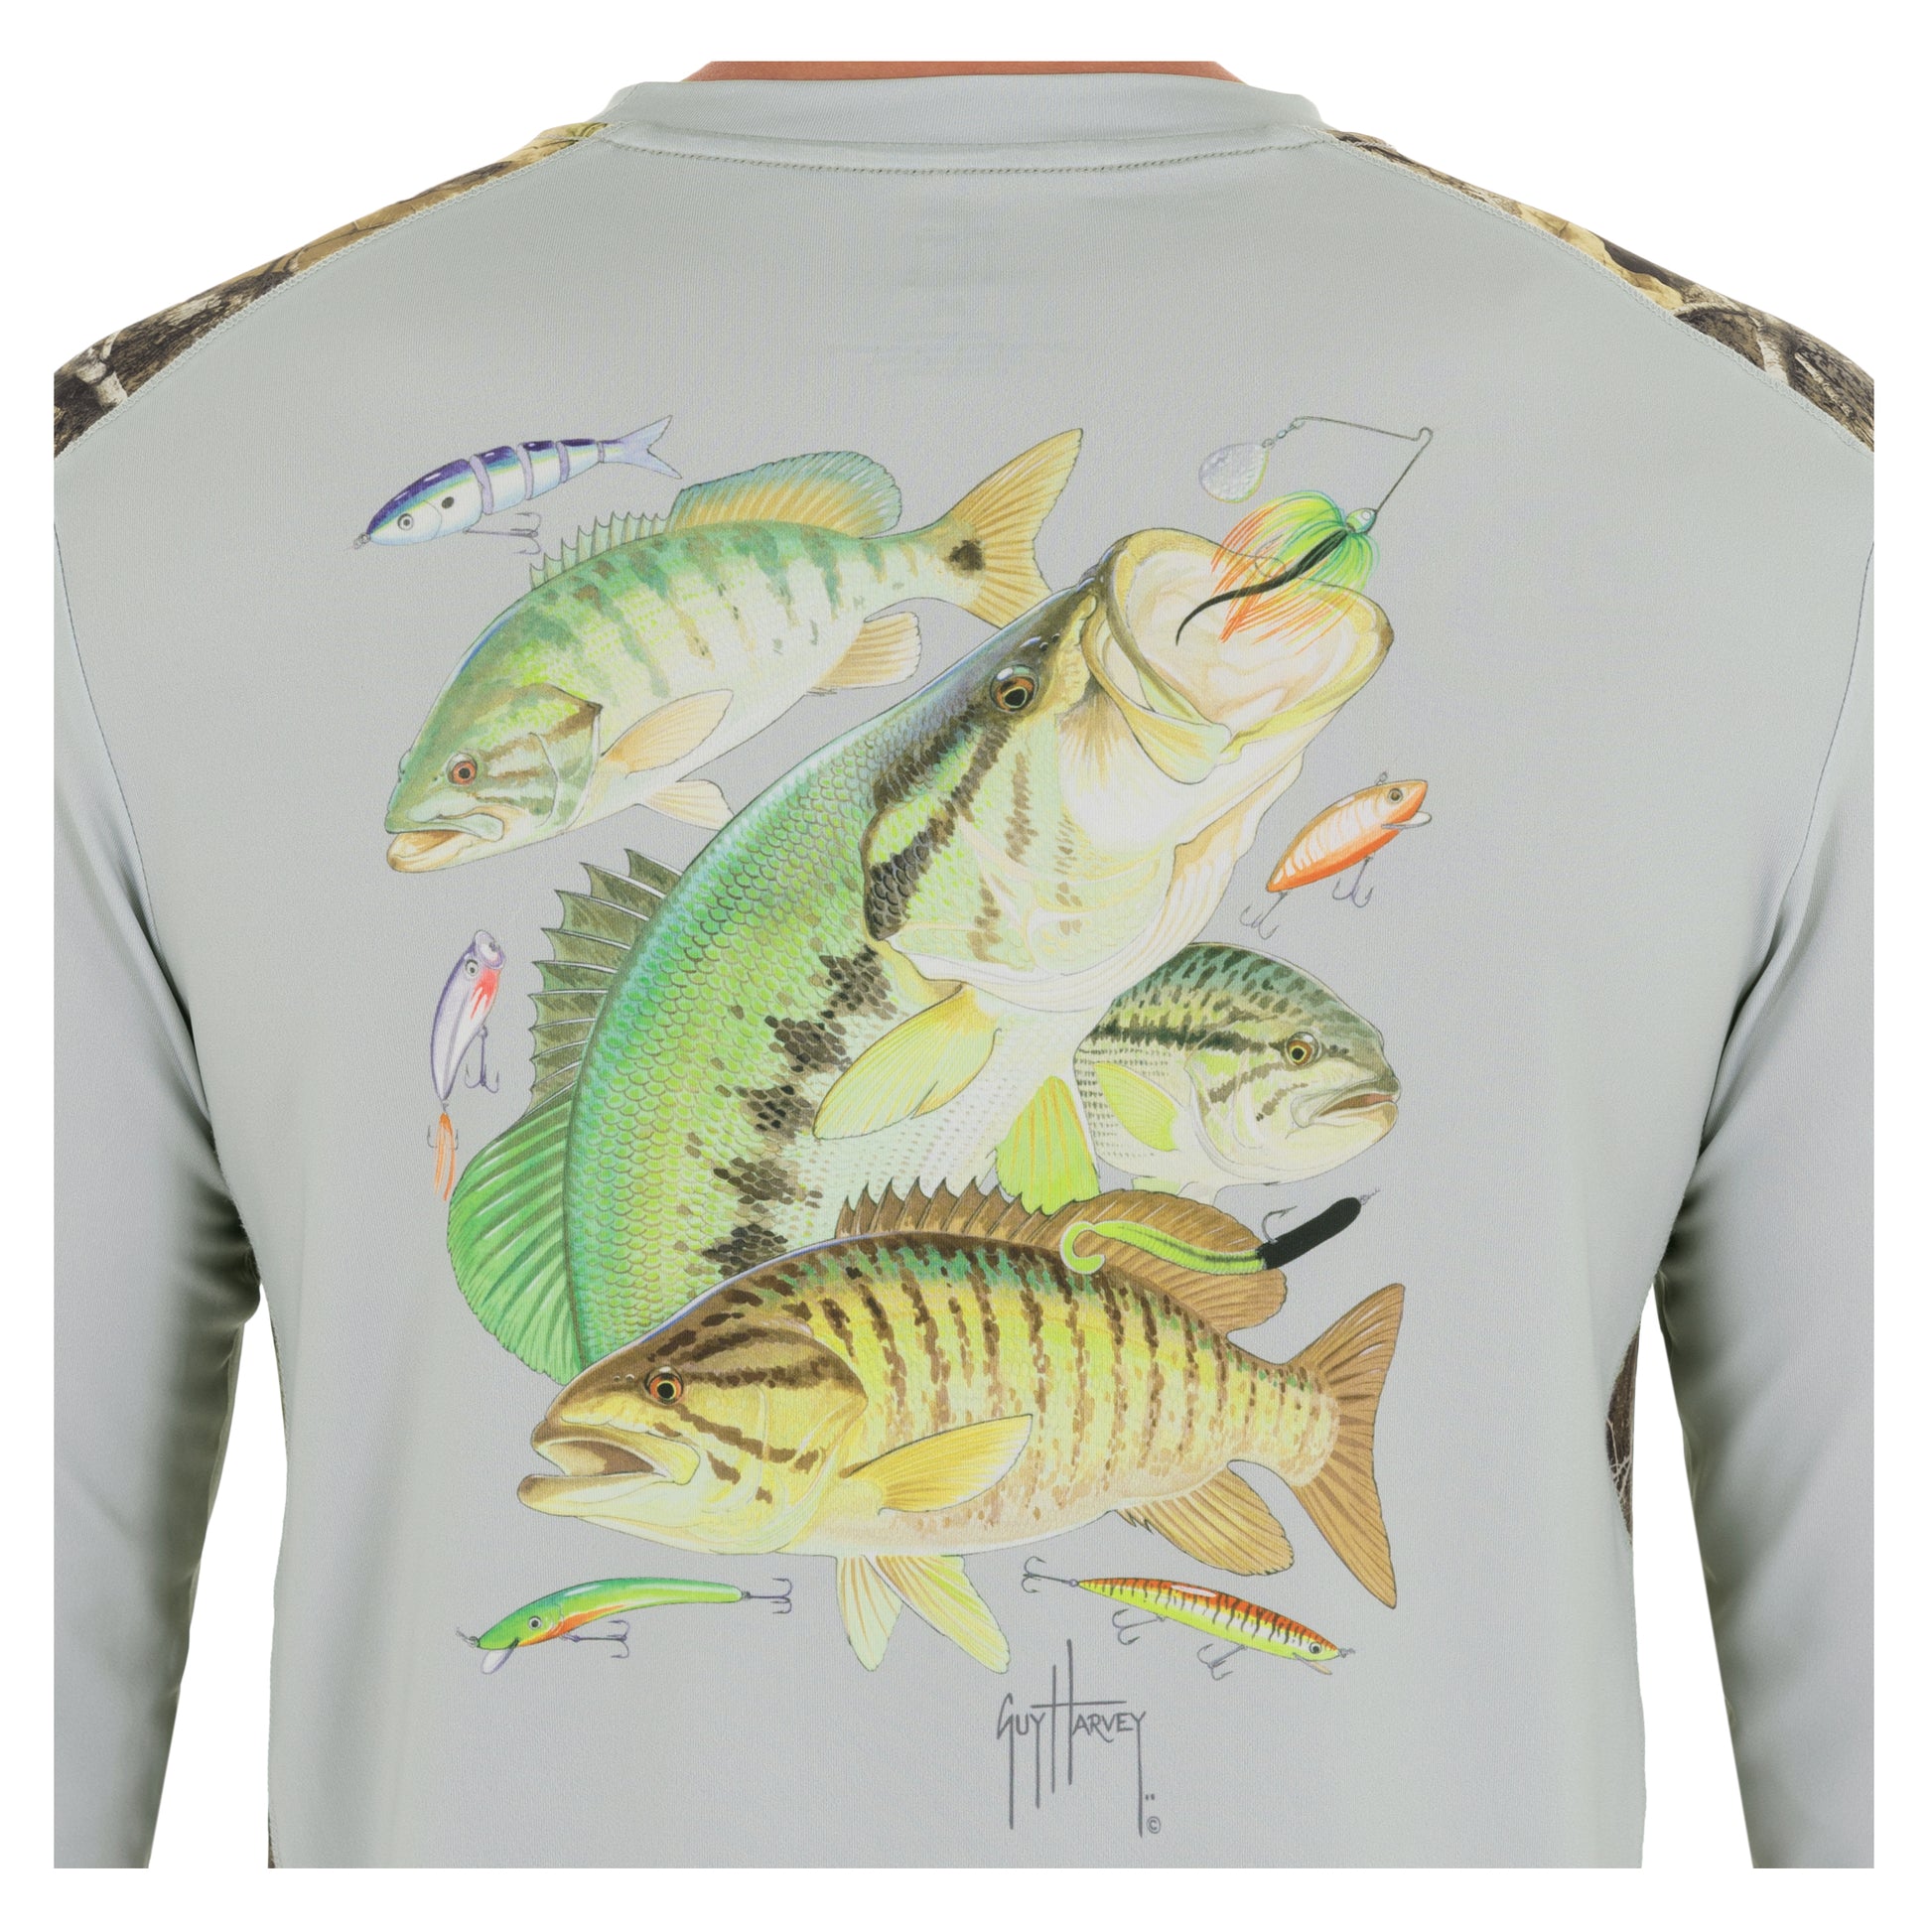 Does This Make My Bass Look Big Fishing T Men's Back Print T-shirt